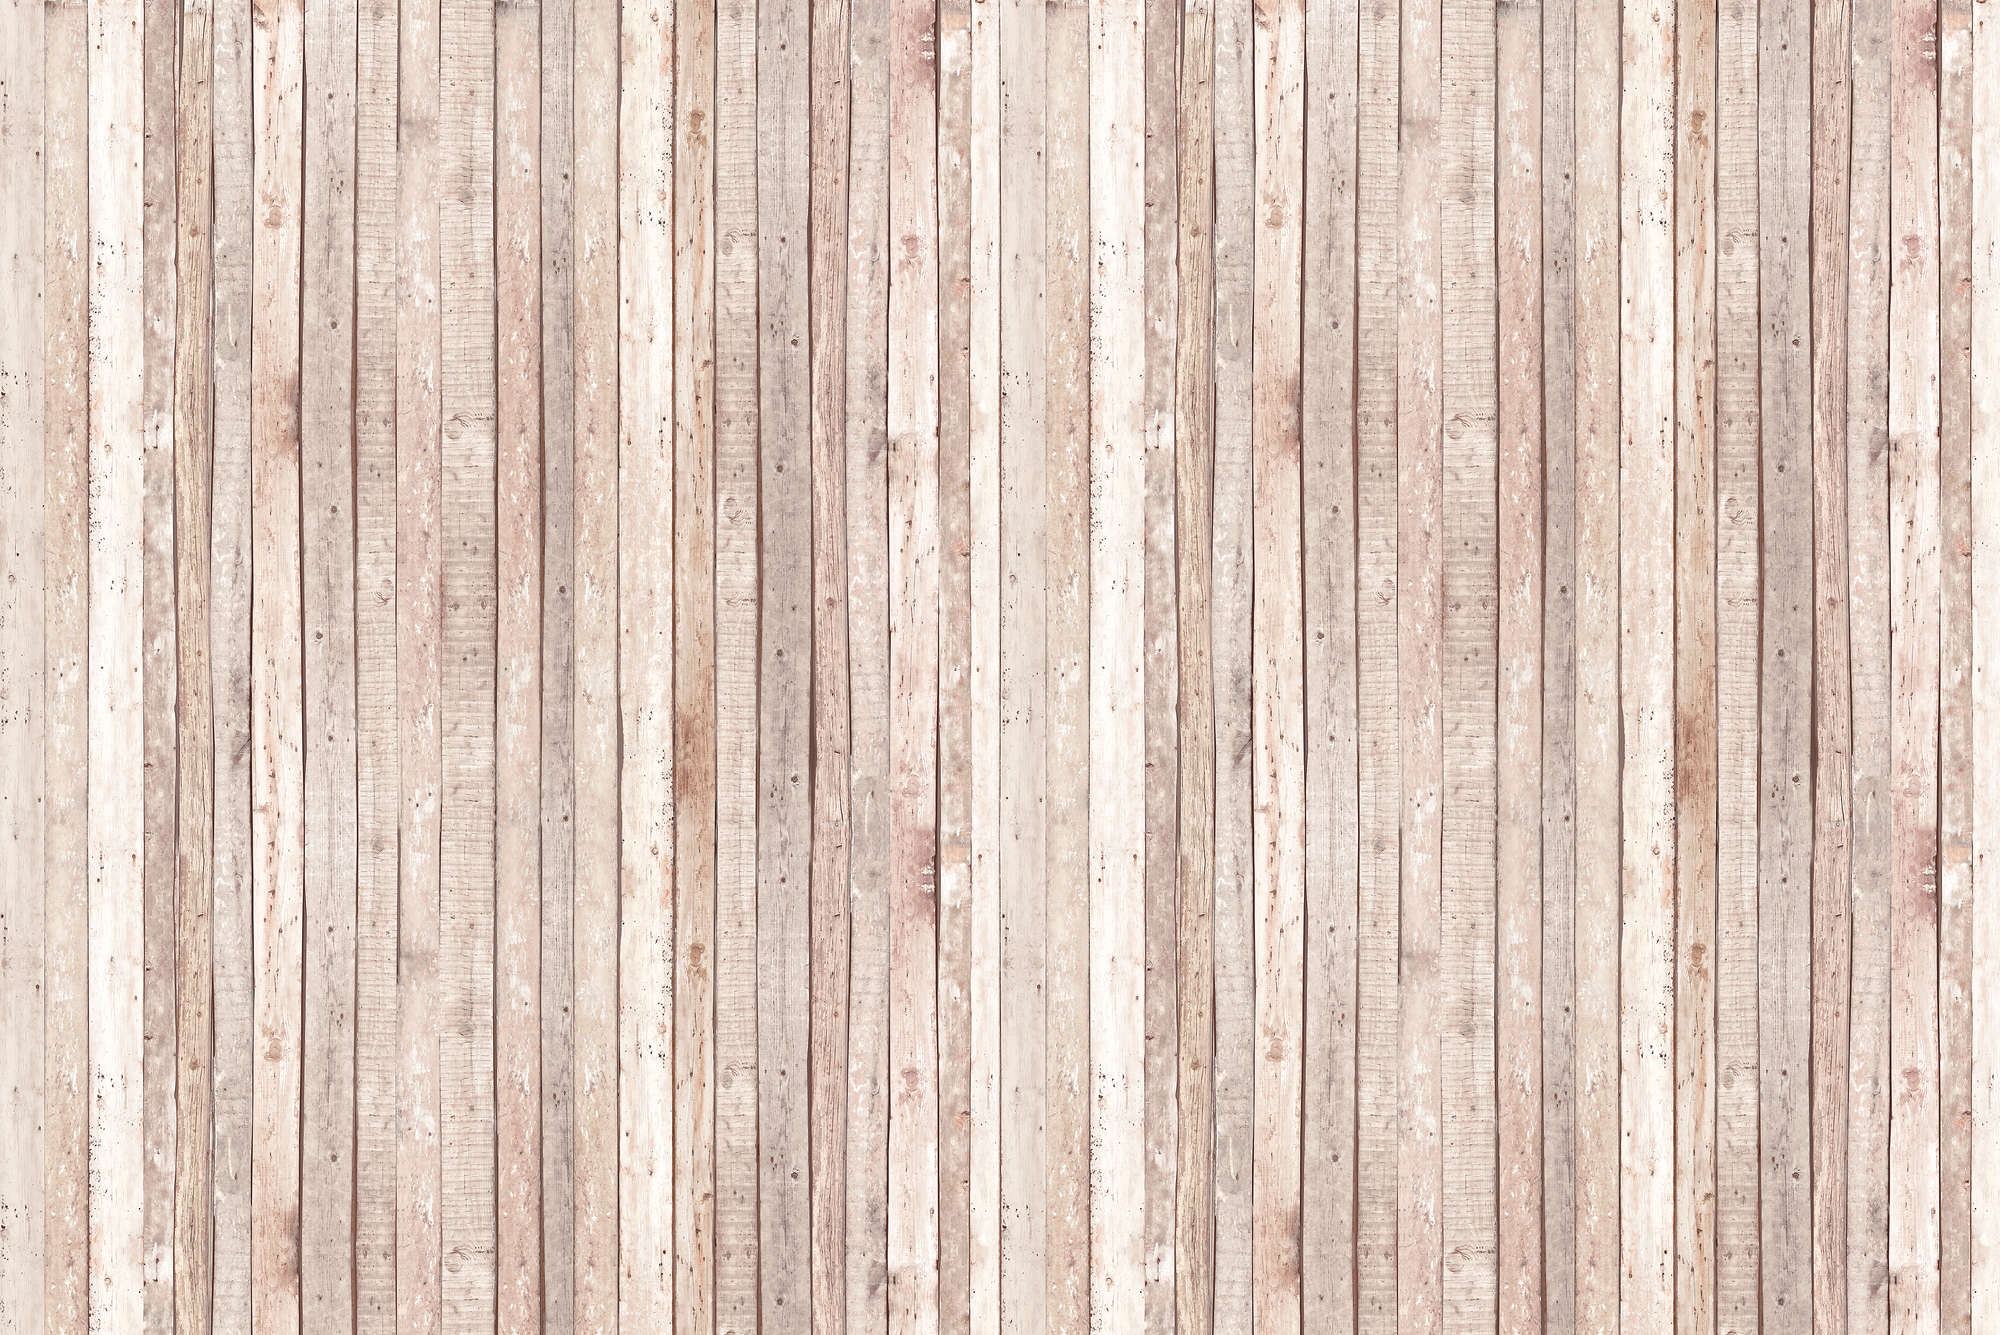             Fototapete Wand aus Holzbrettern – Perlmutt Glattvlies
        